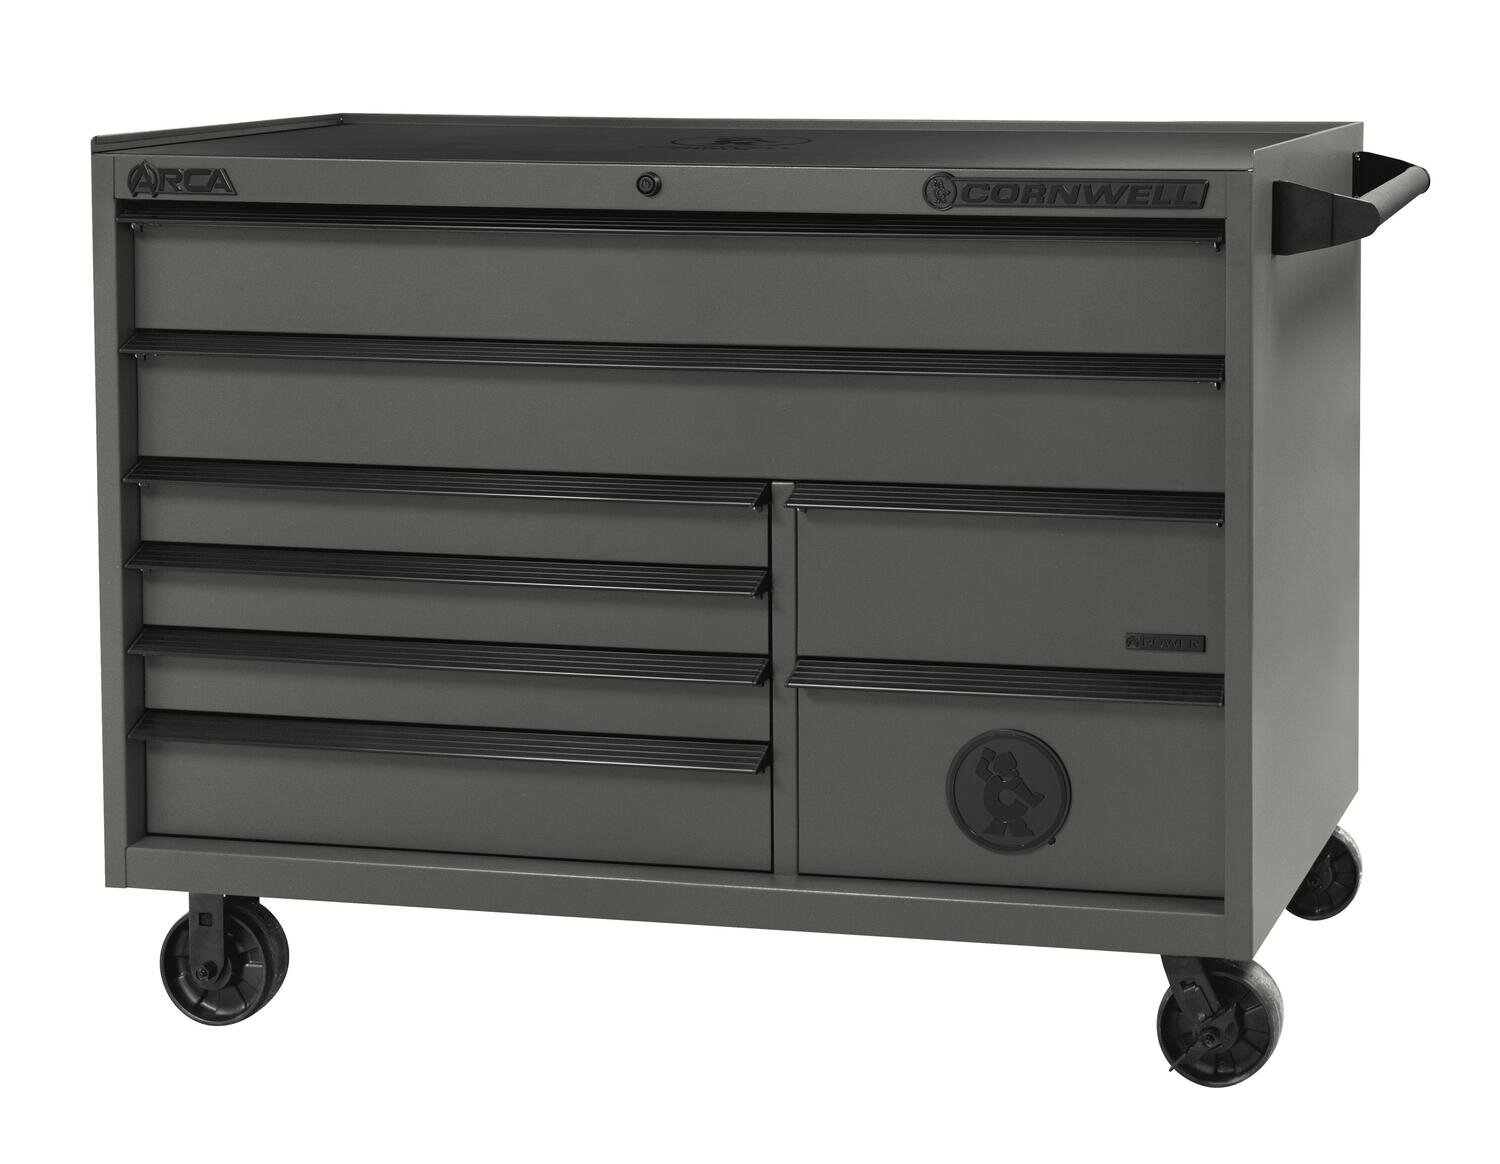 CTSASR578KST - ARCA® 57” 8-Drawer Double Bank Roller Cabinet, Storm